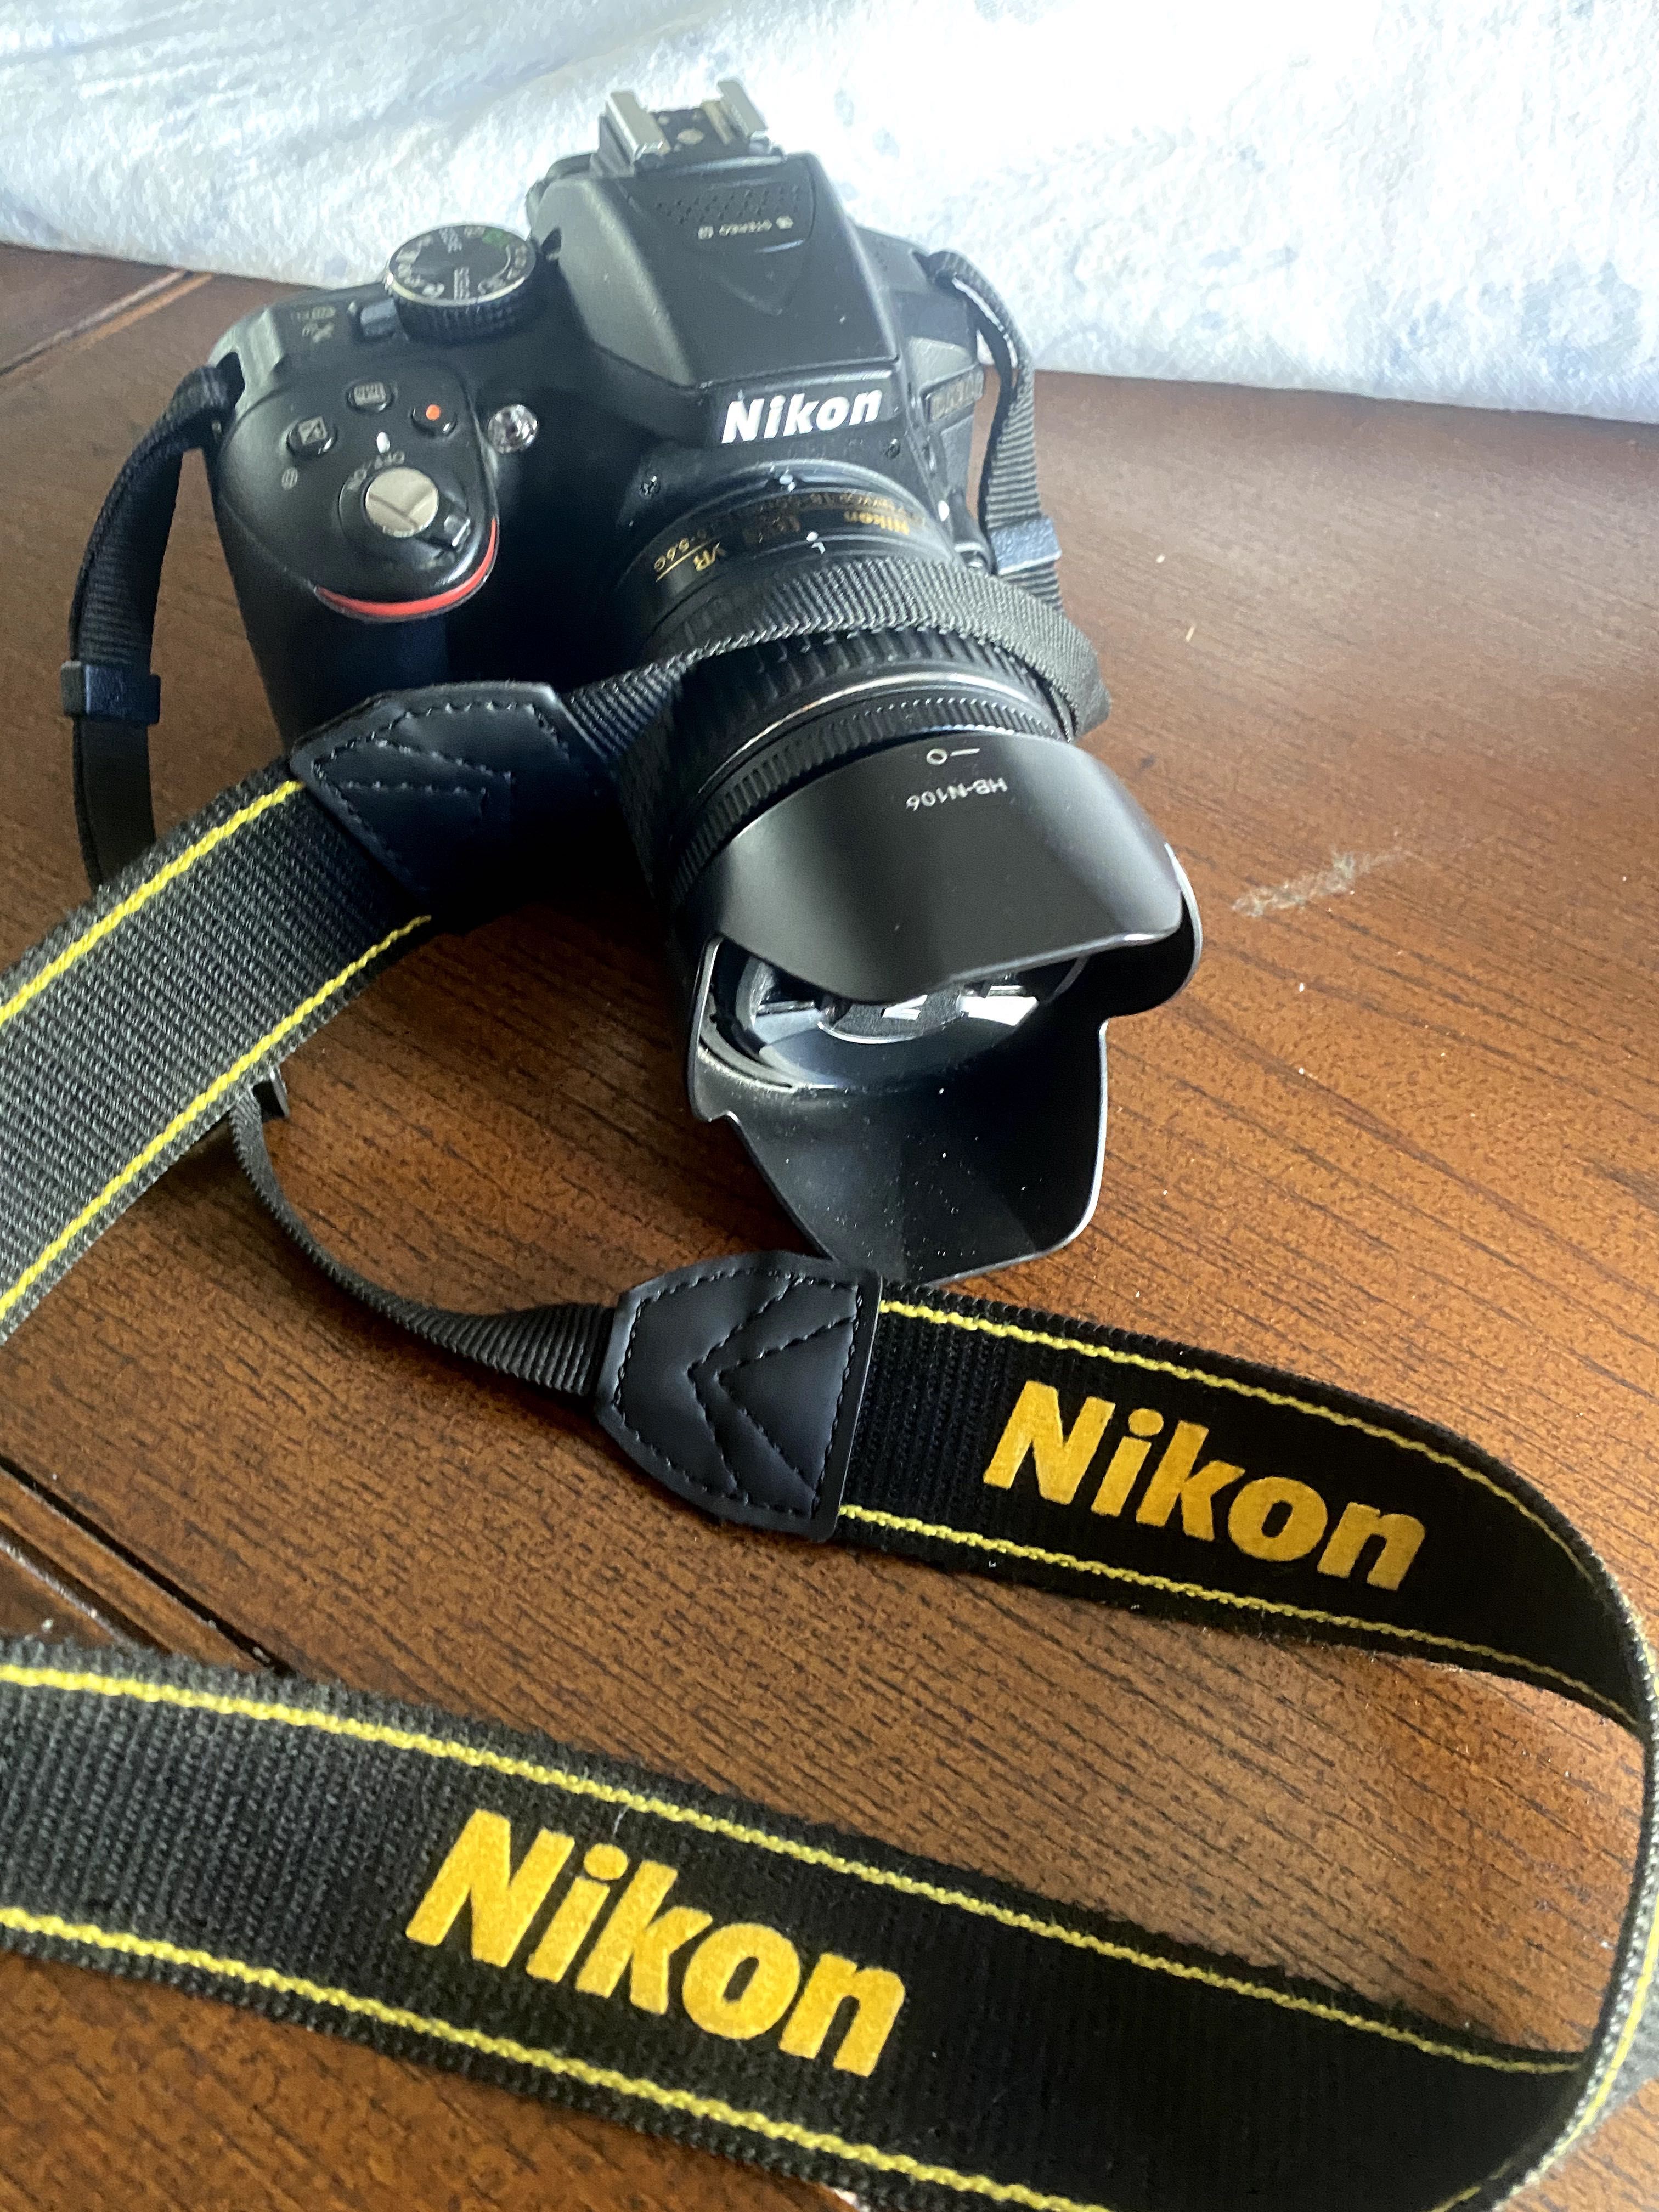 Nikon d5300 + Lente 18-55 3.5-5.6 G VR